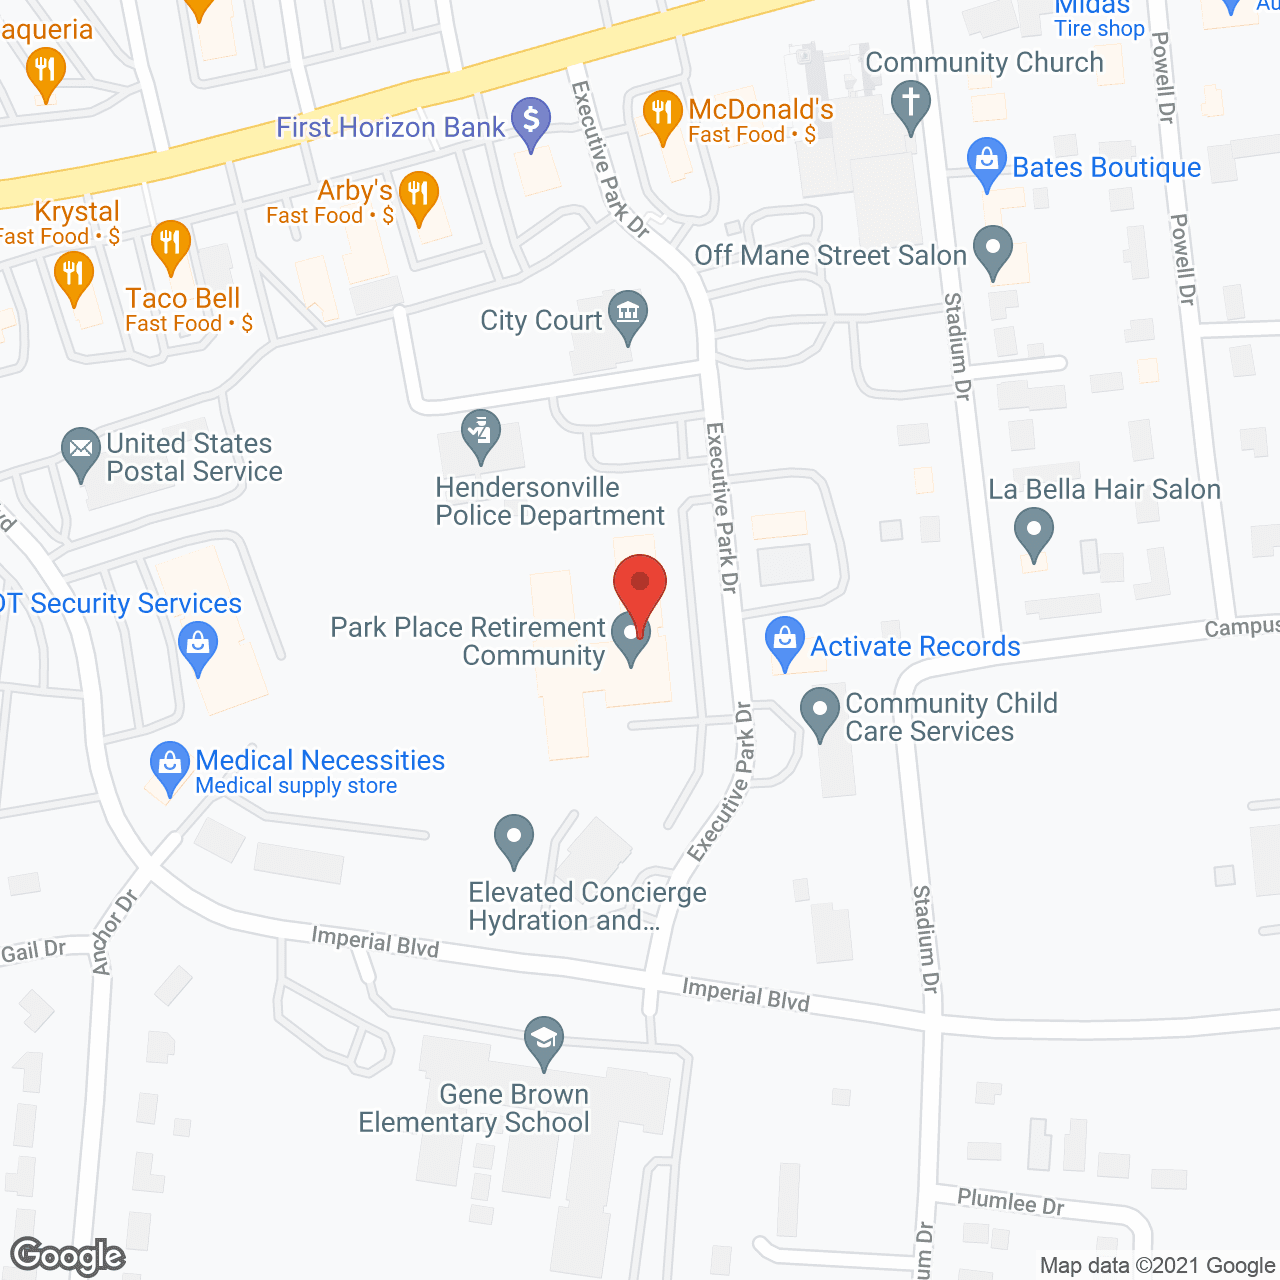 Park Place Retirement Community in google map